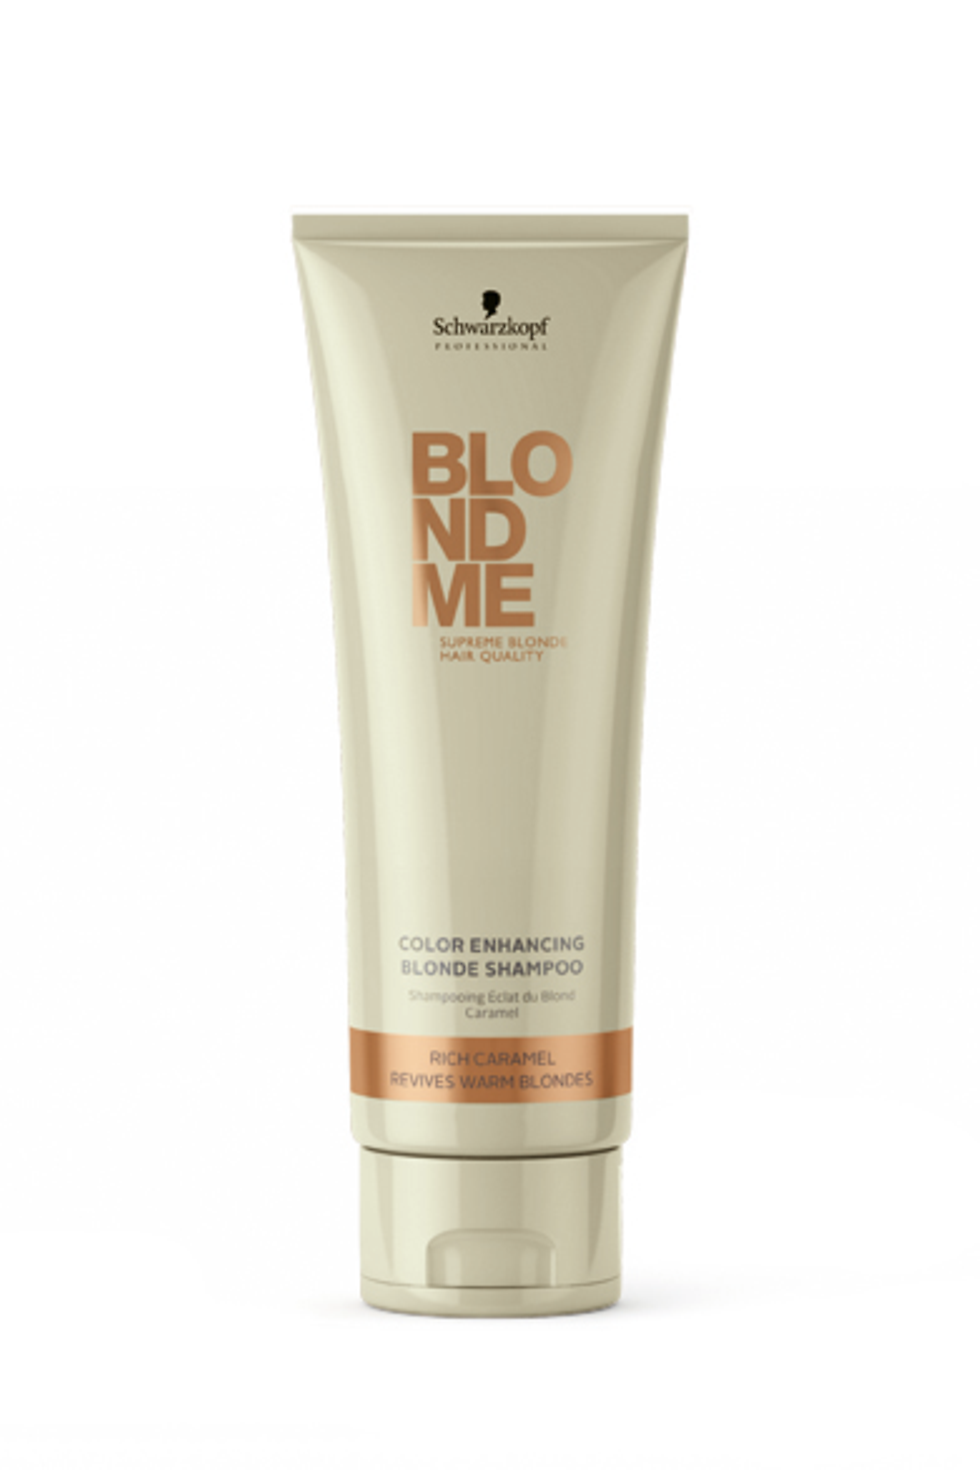 BLONDME Color Enhancing Blonde Shampoo Rich-Caramel